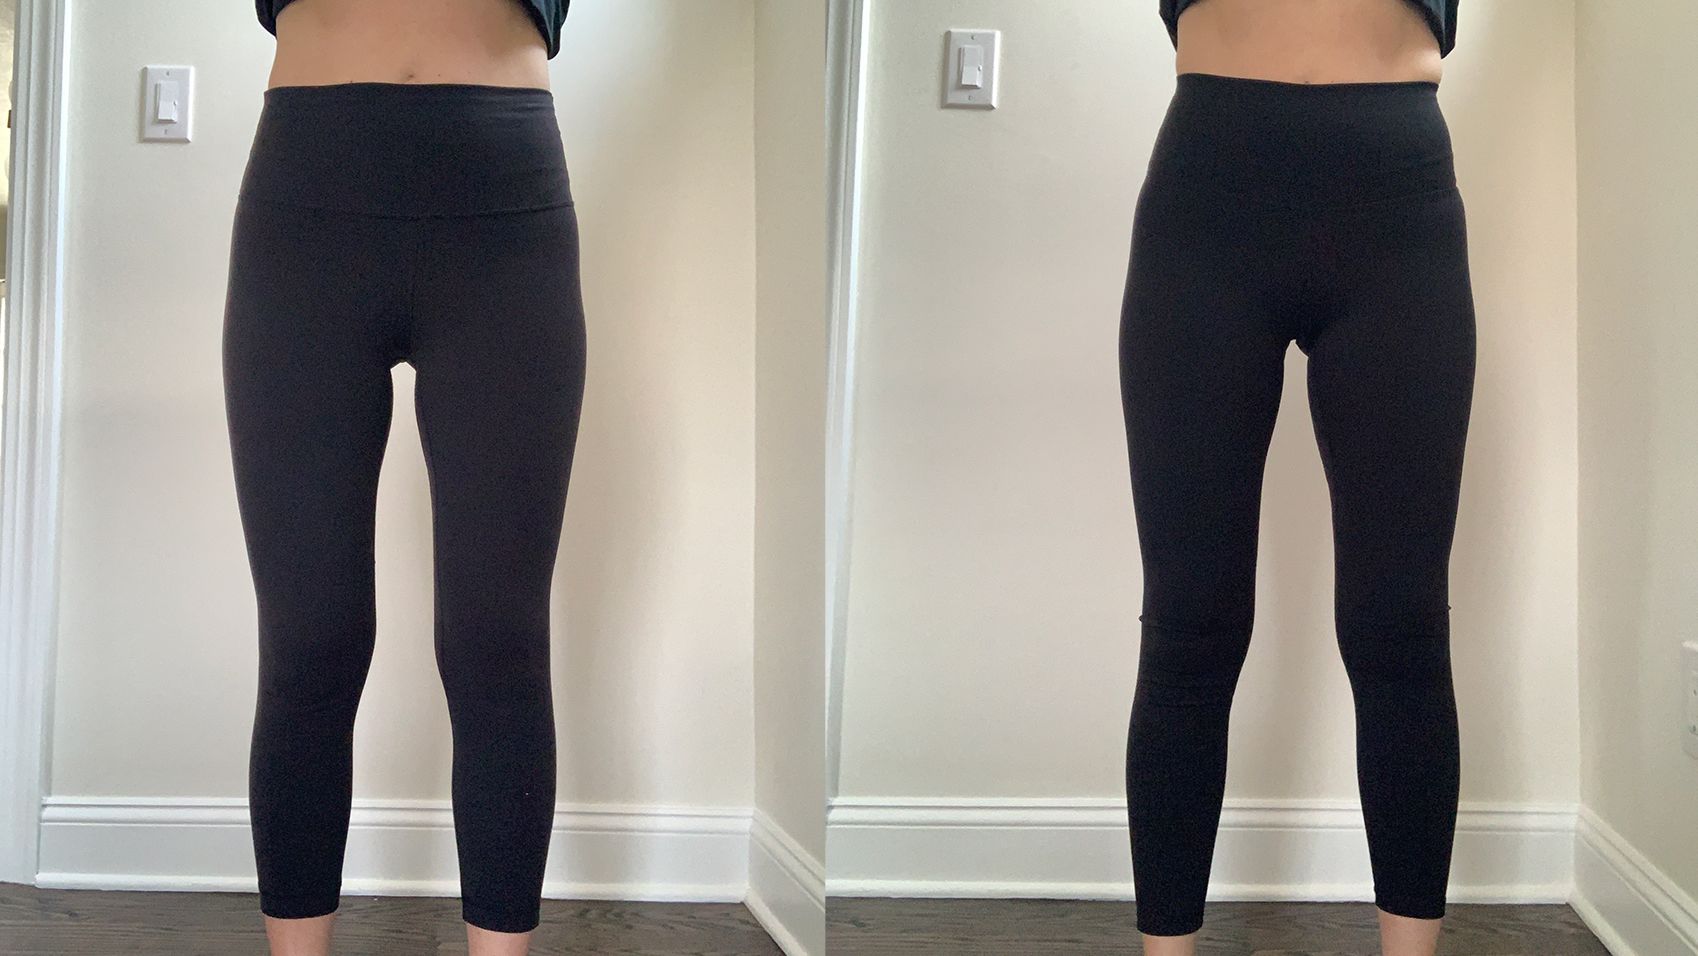 Lu Lu Pant align Lemon Yoga Fitness Women Align High Rise Pant Tight Fit  Leggings Sports Pants with Invisible Pocket Jogger